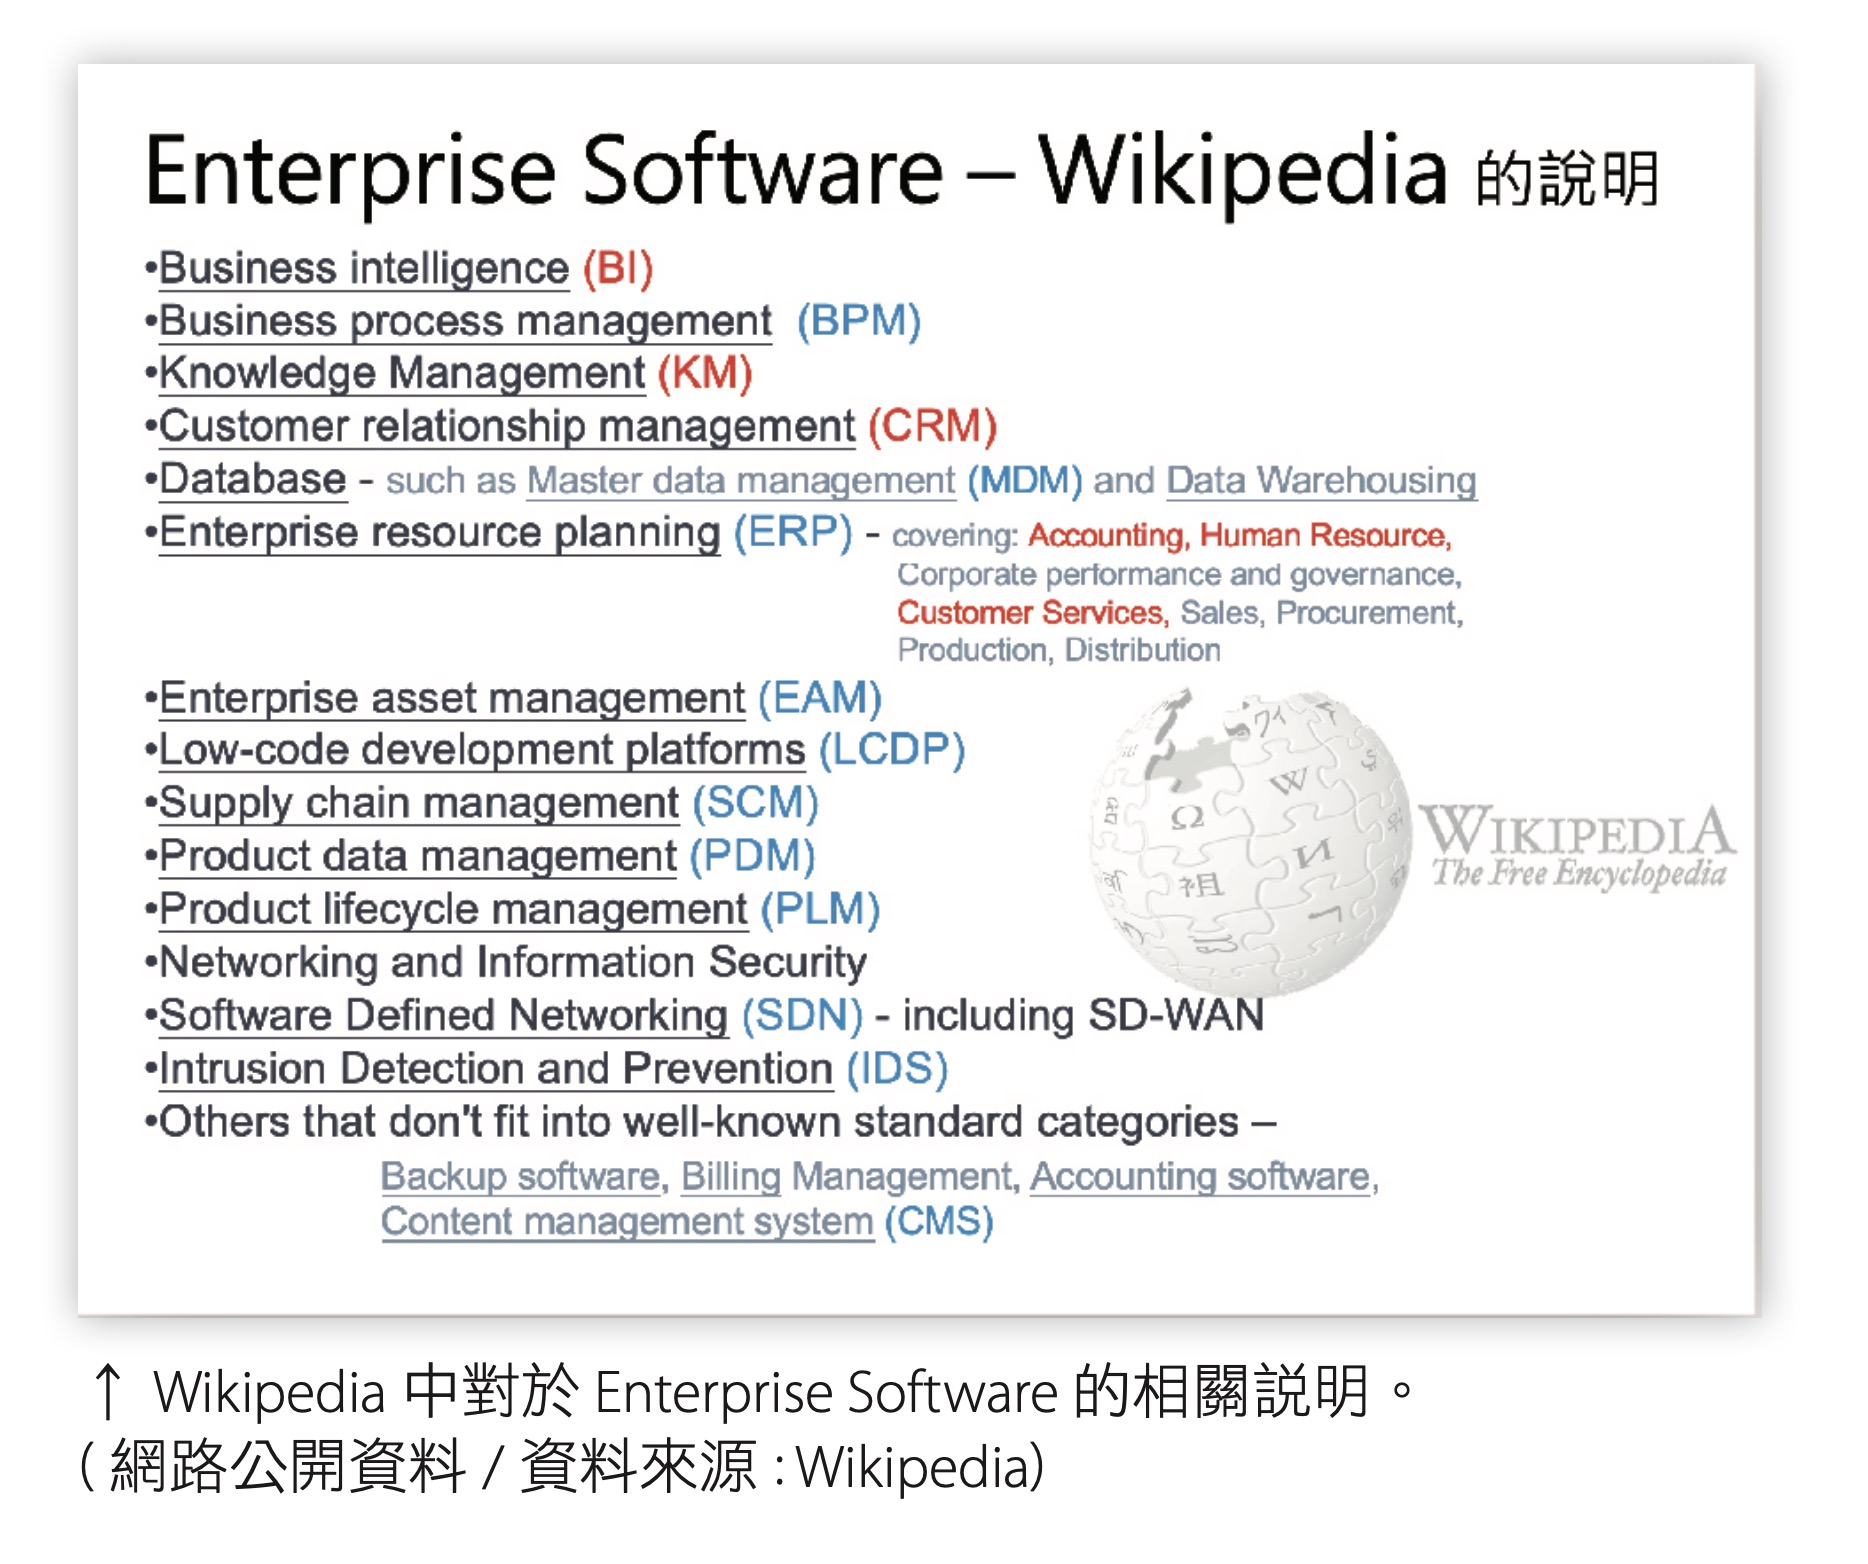 Wikipedia 中對於 Enterprise Software 的相關說明